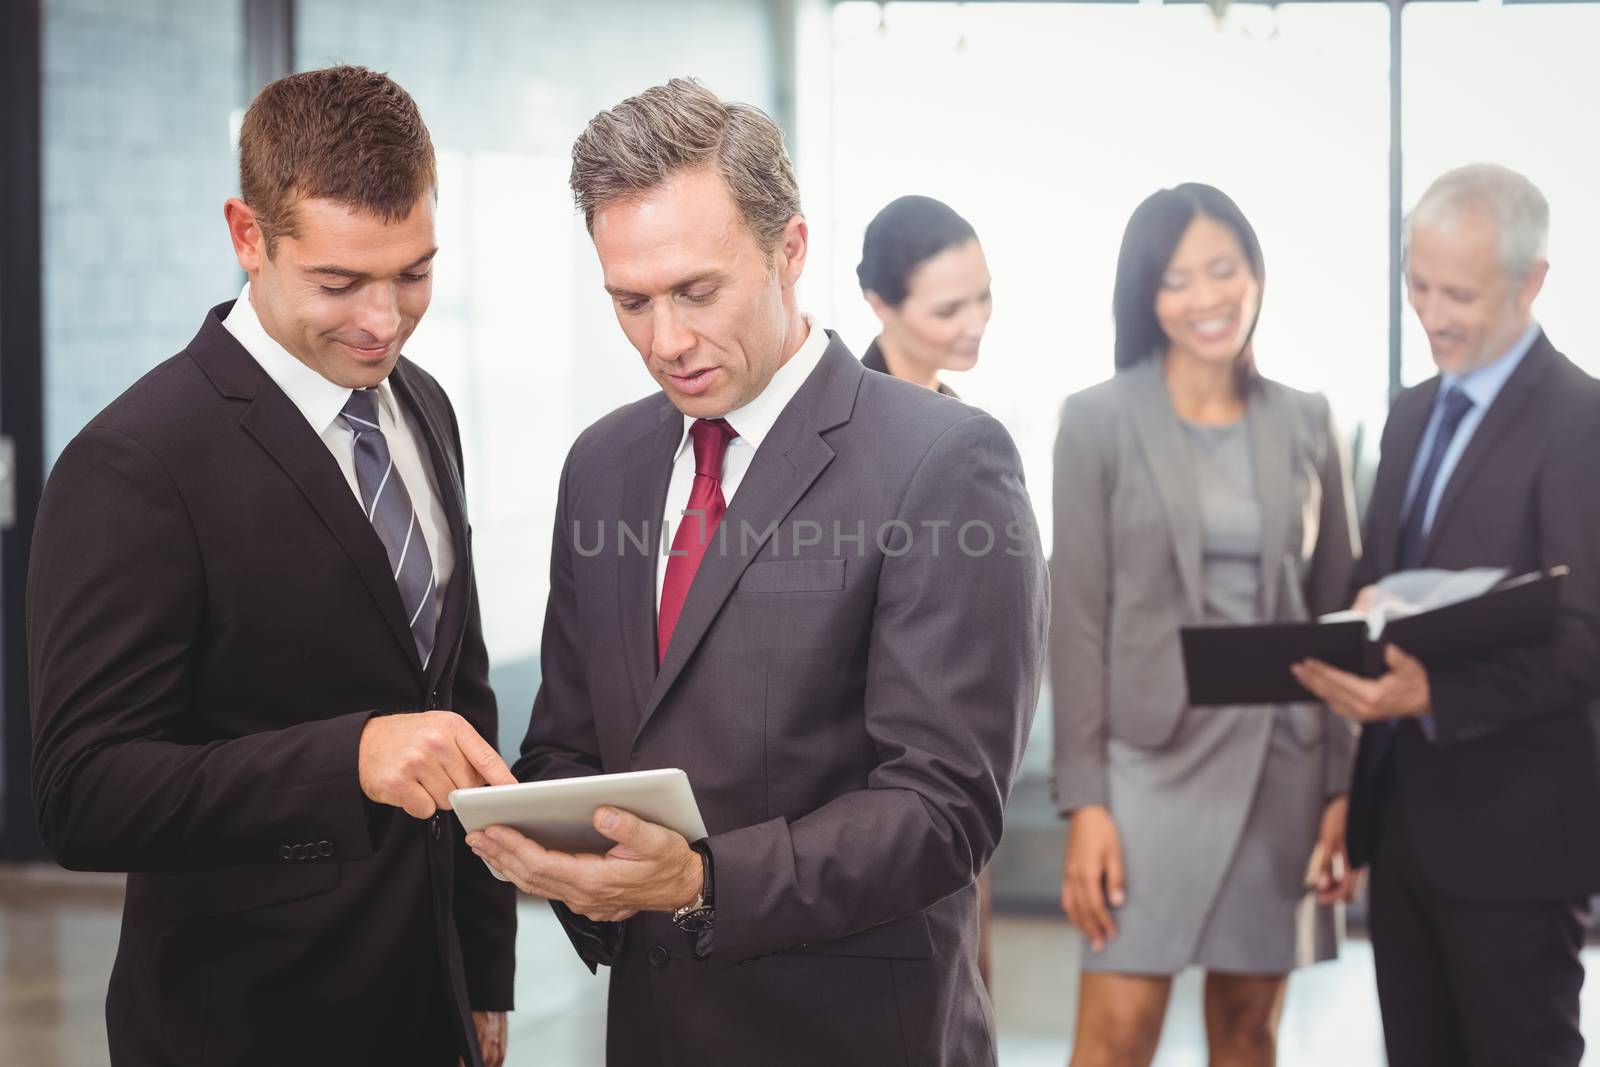 Businessmen using digital tablet in office